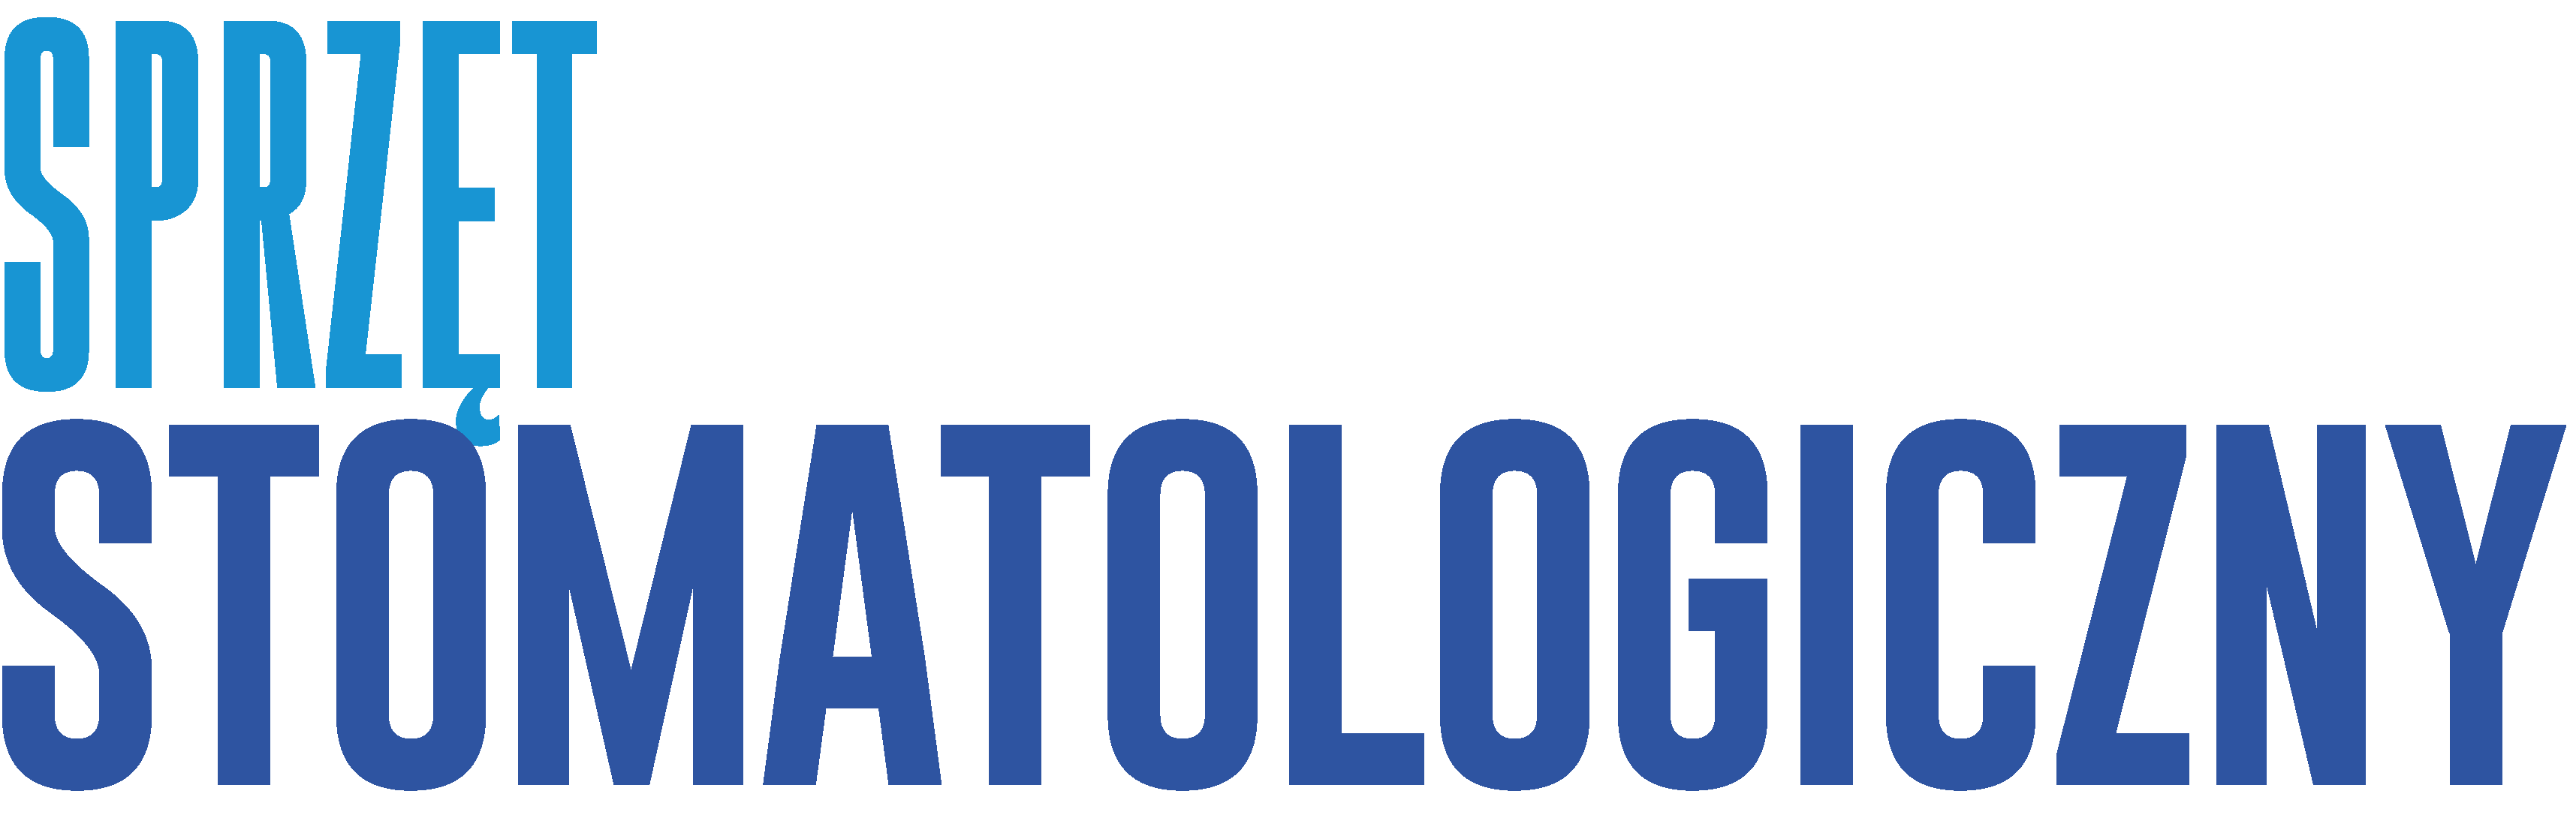 Sprzęt Stomatologiczny Logo